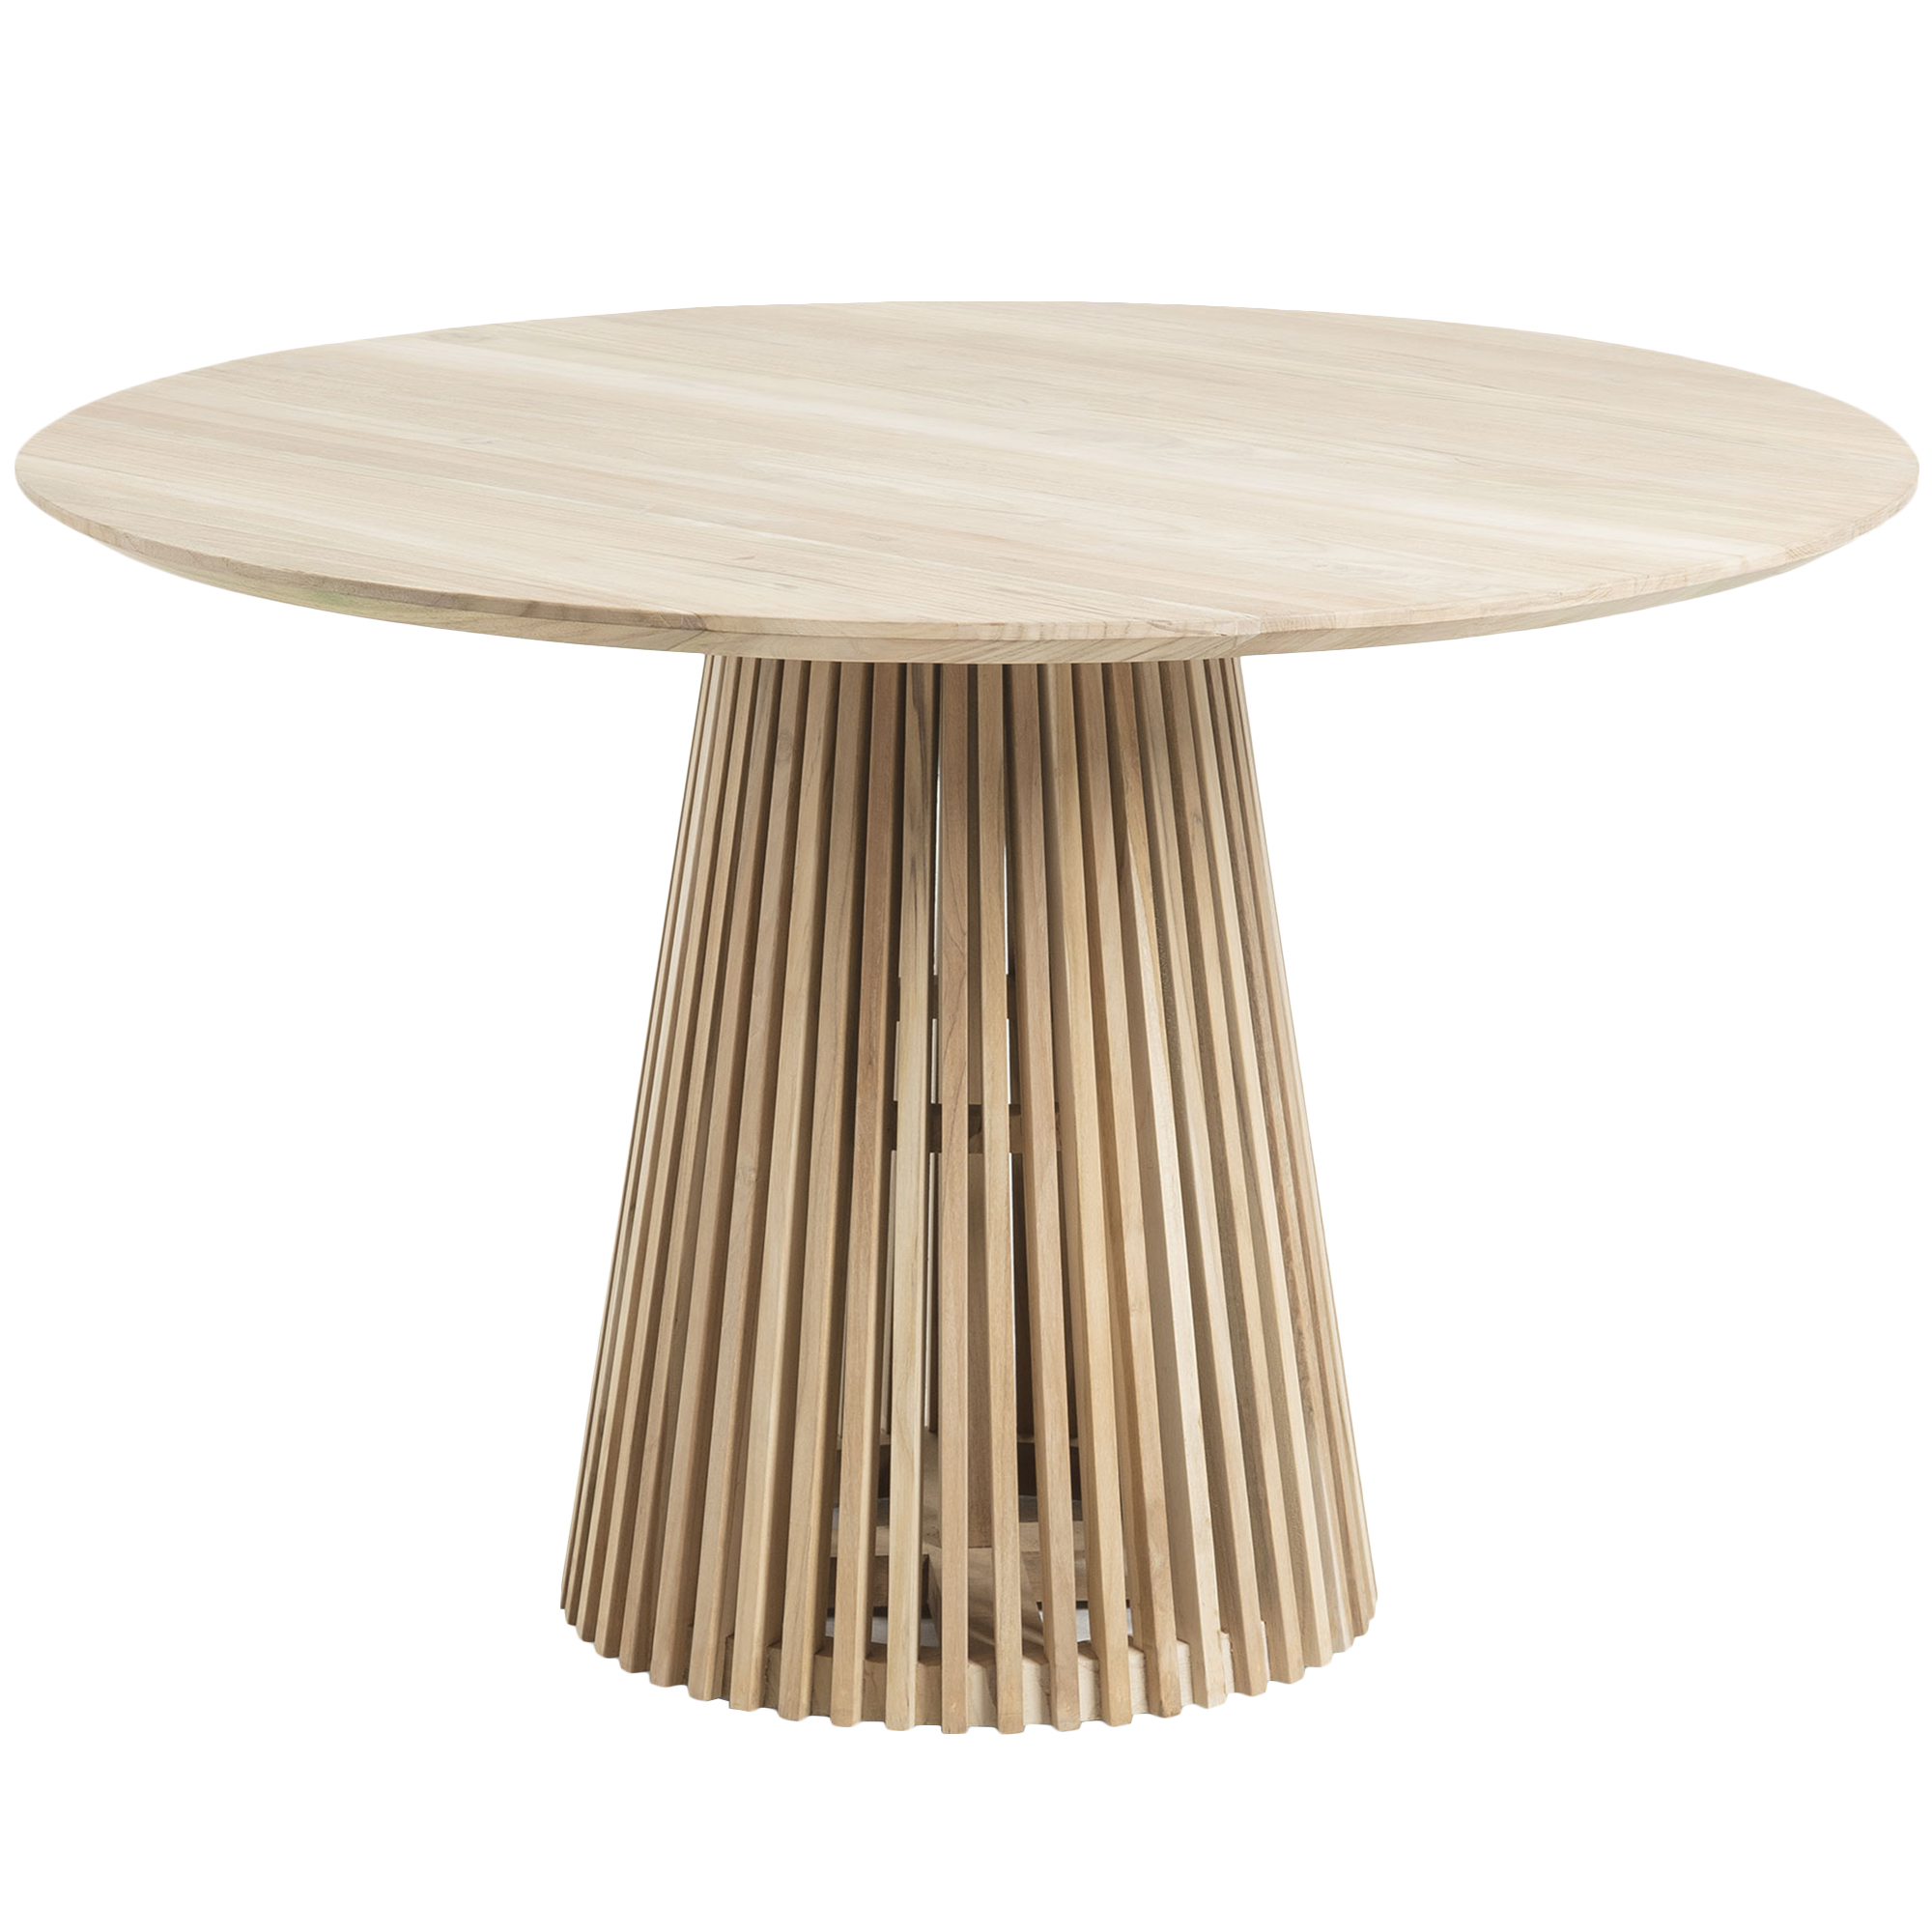 Linea Furniture Darla Round Teak Wood, Dining Table Round Wooden